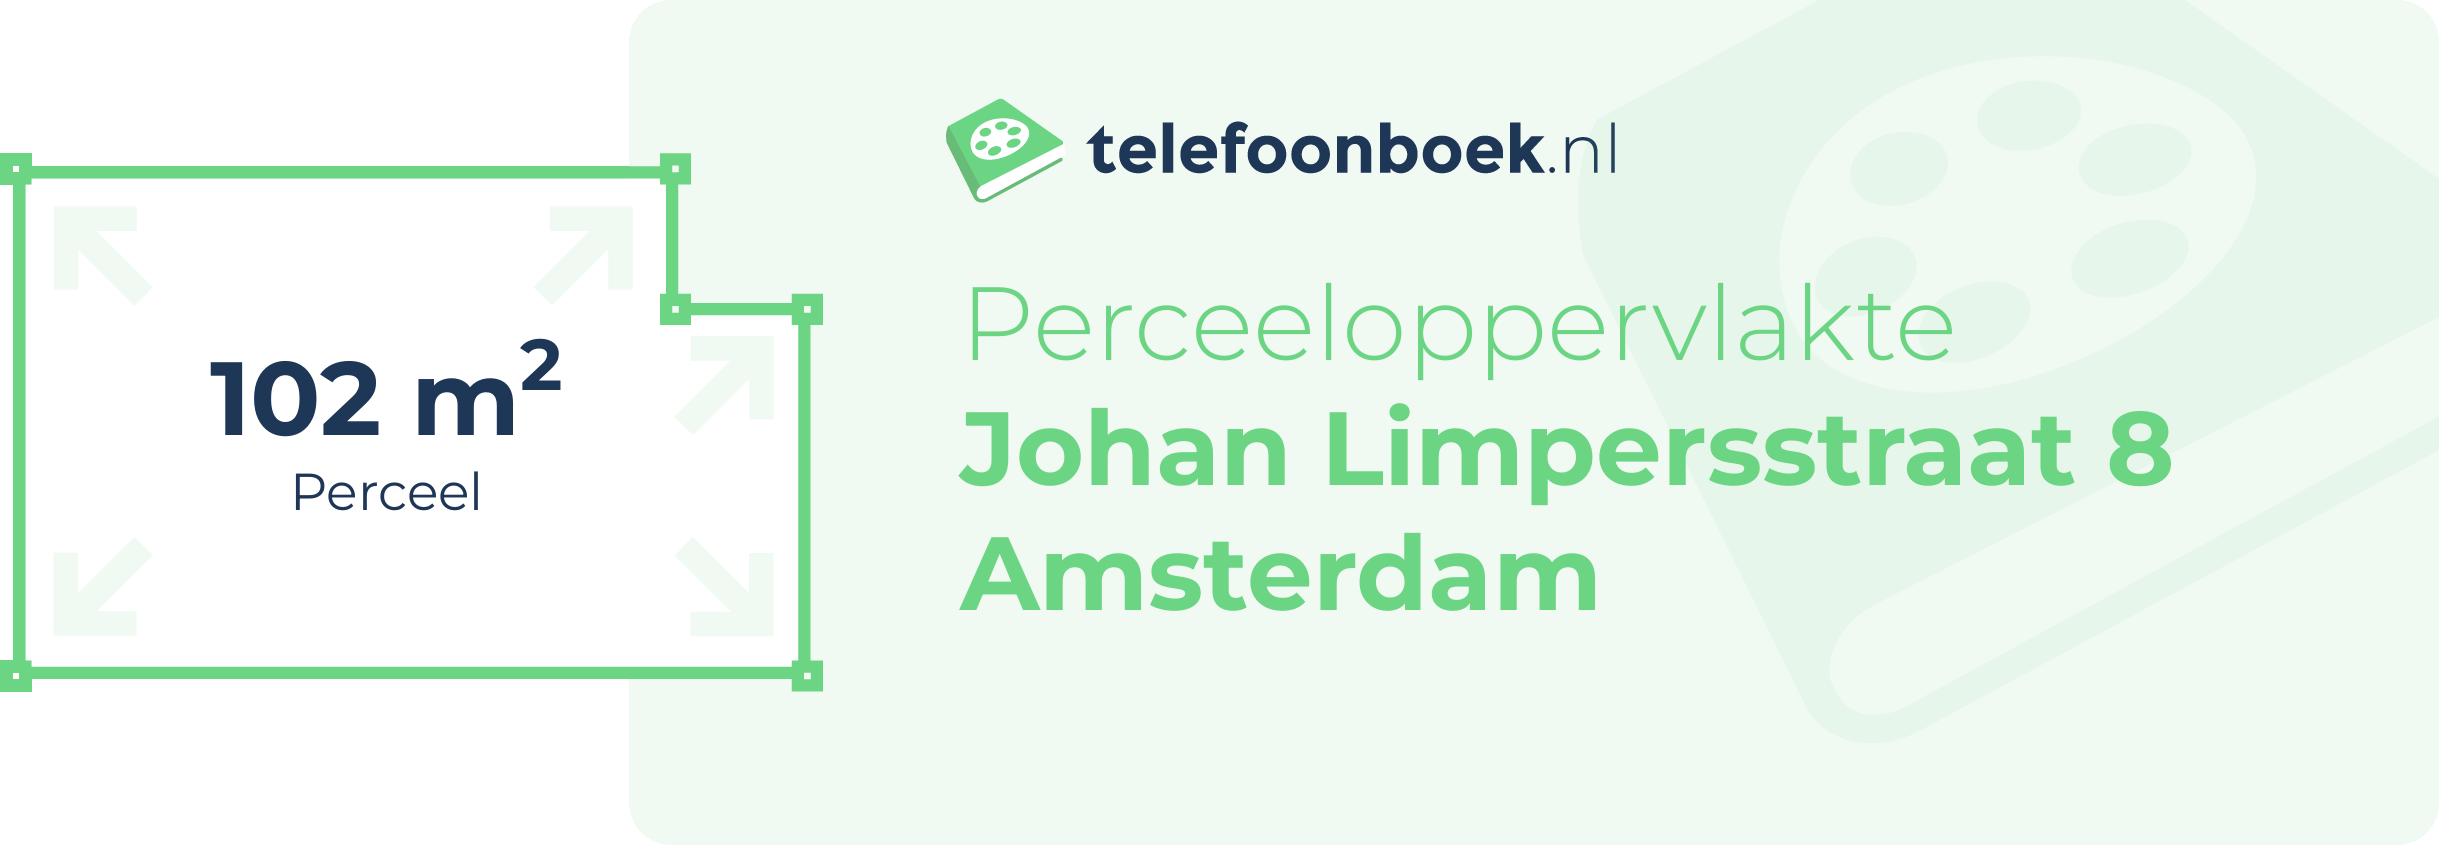 Perceeloppervlakte Johan Limpersstraat 8 Amsterdam